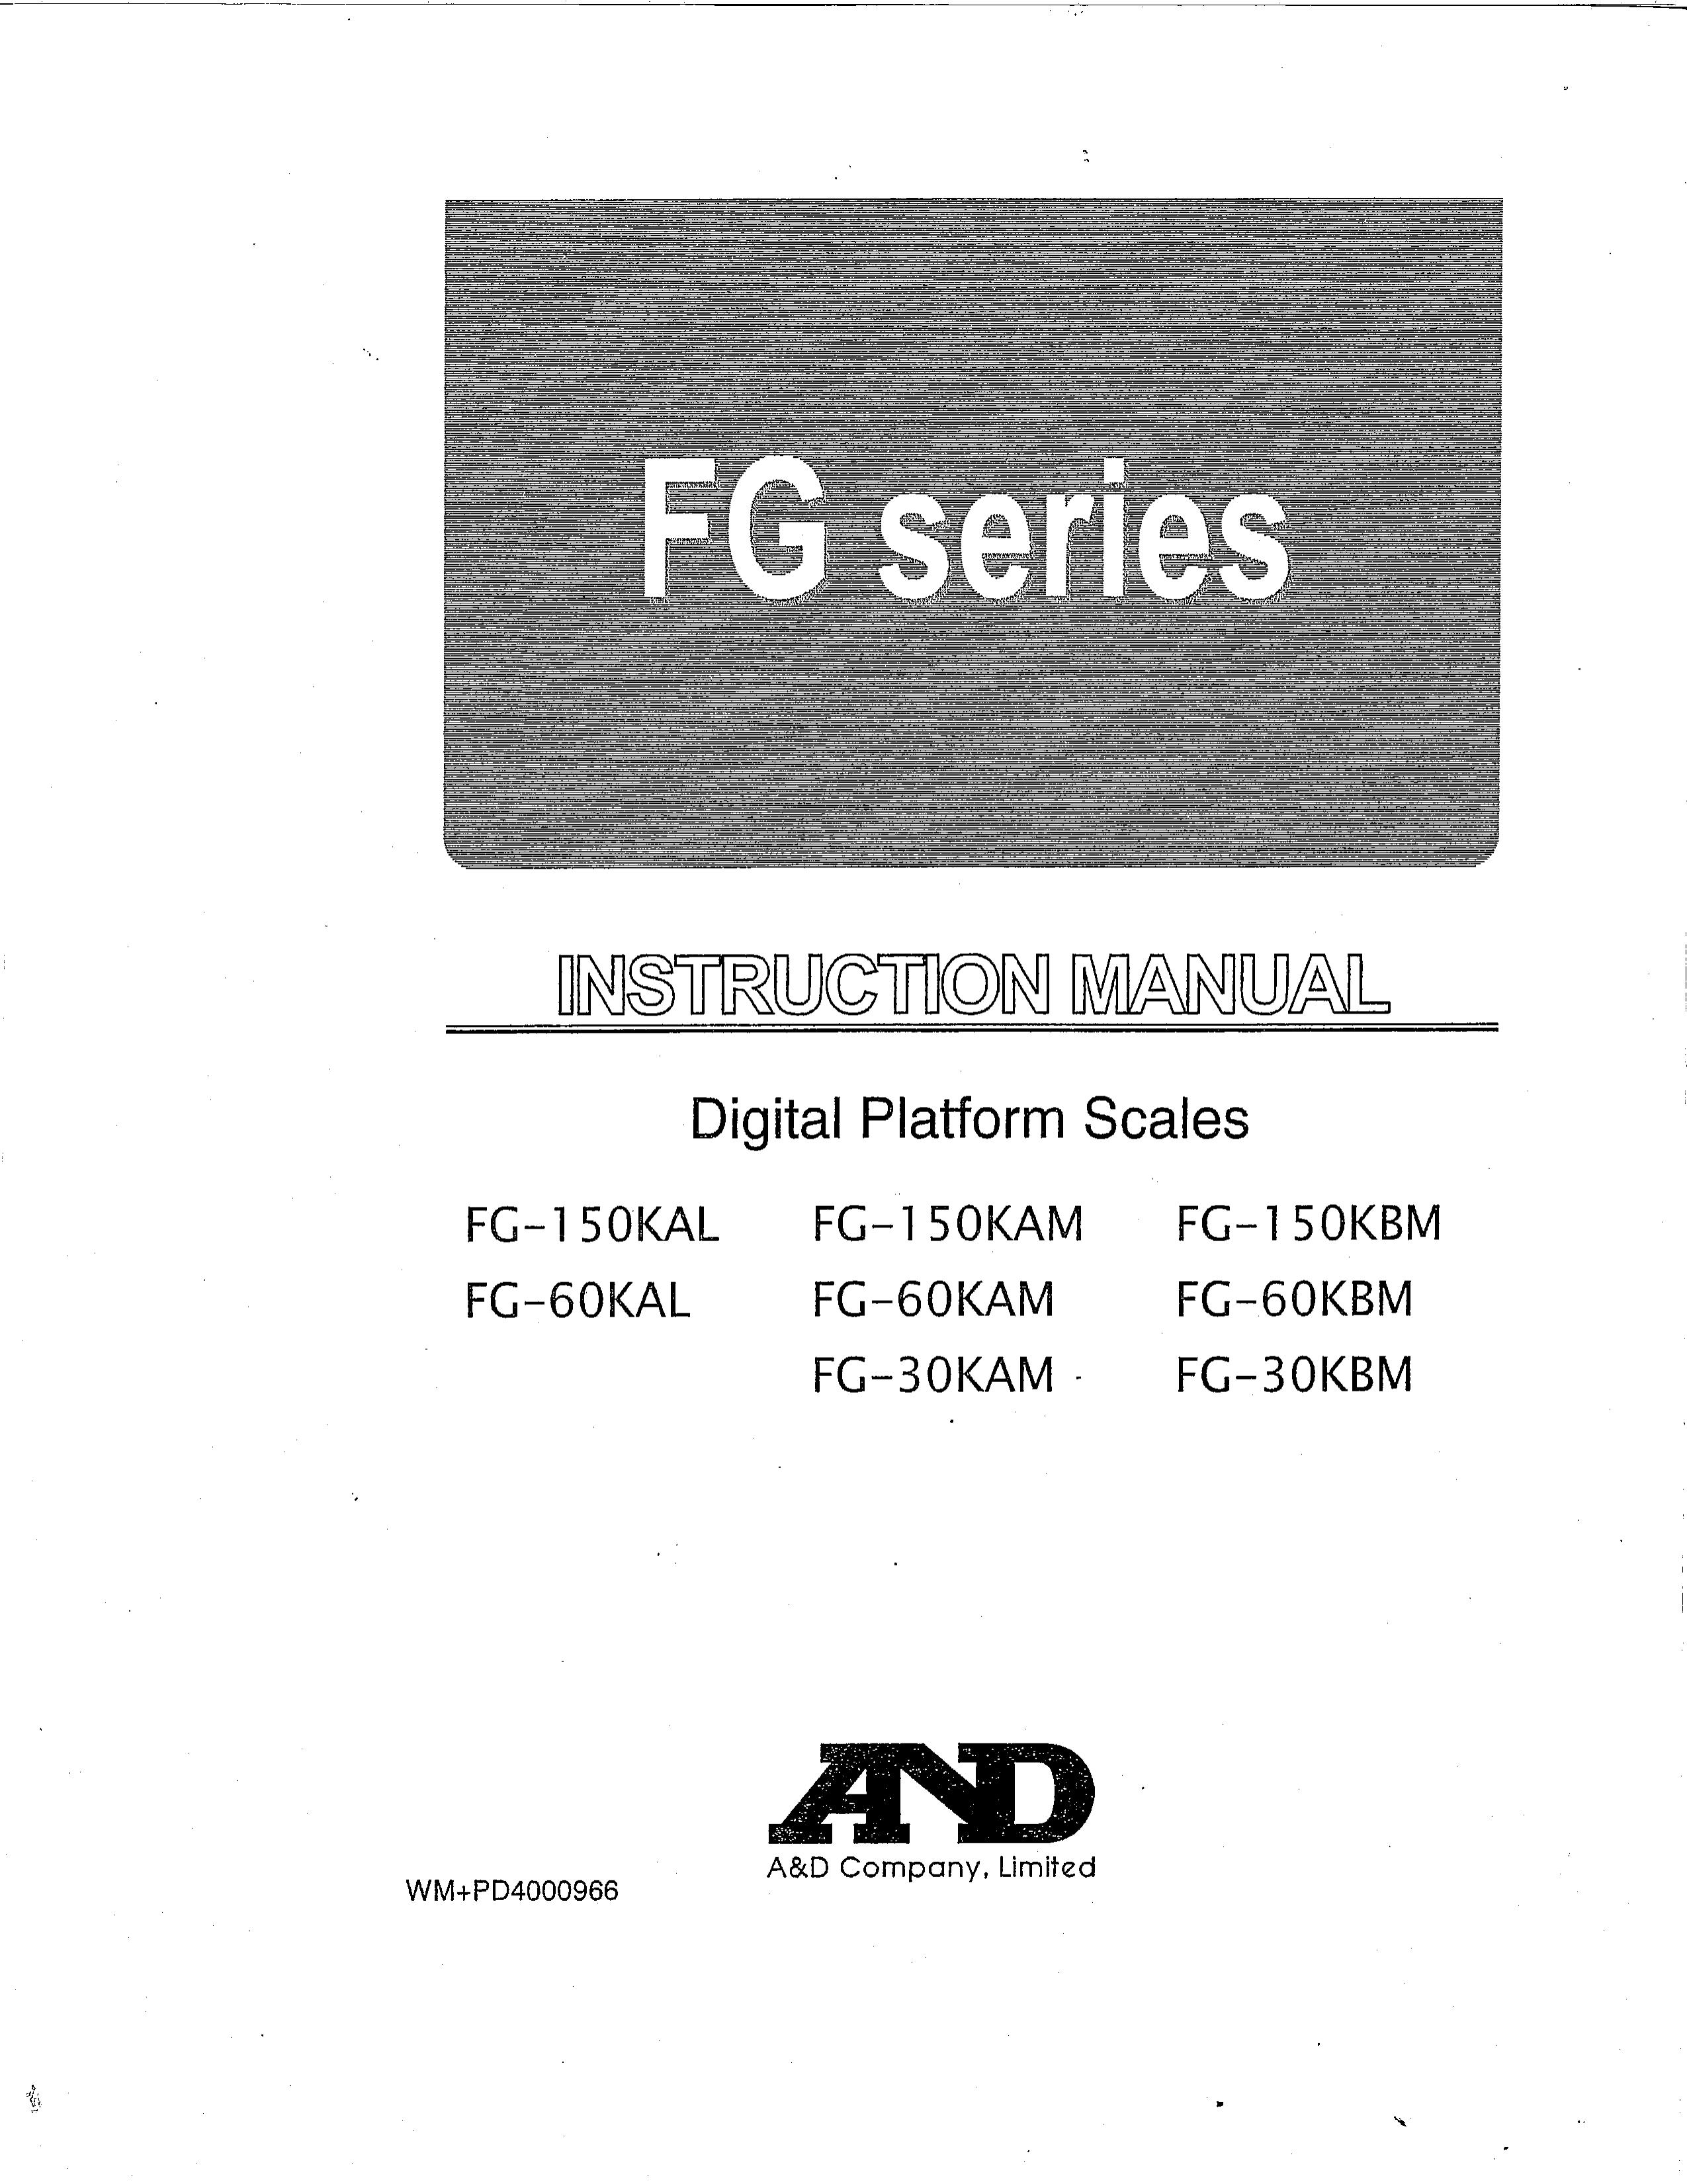 A&D FG-30KBM Scale User Manual